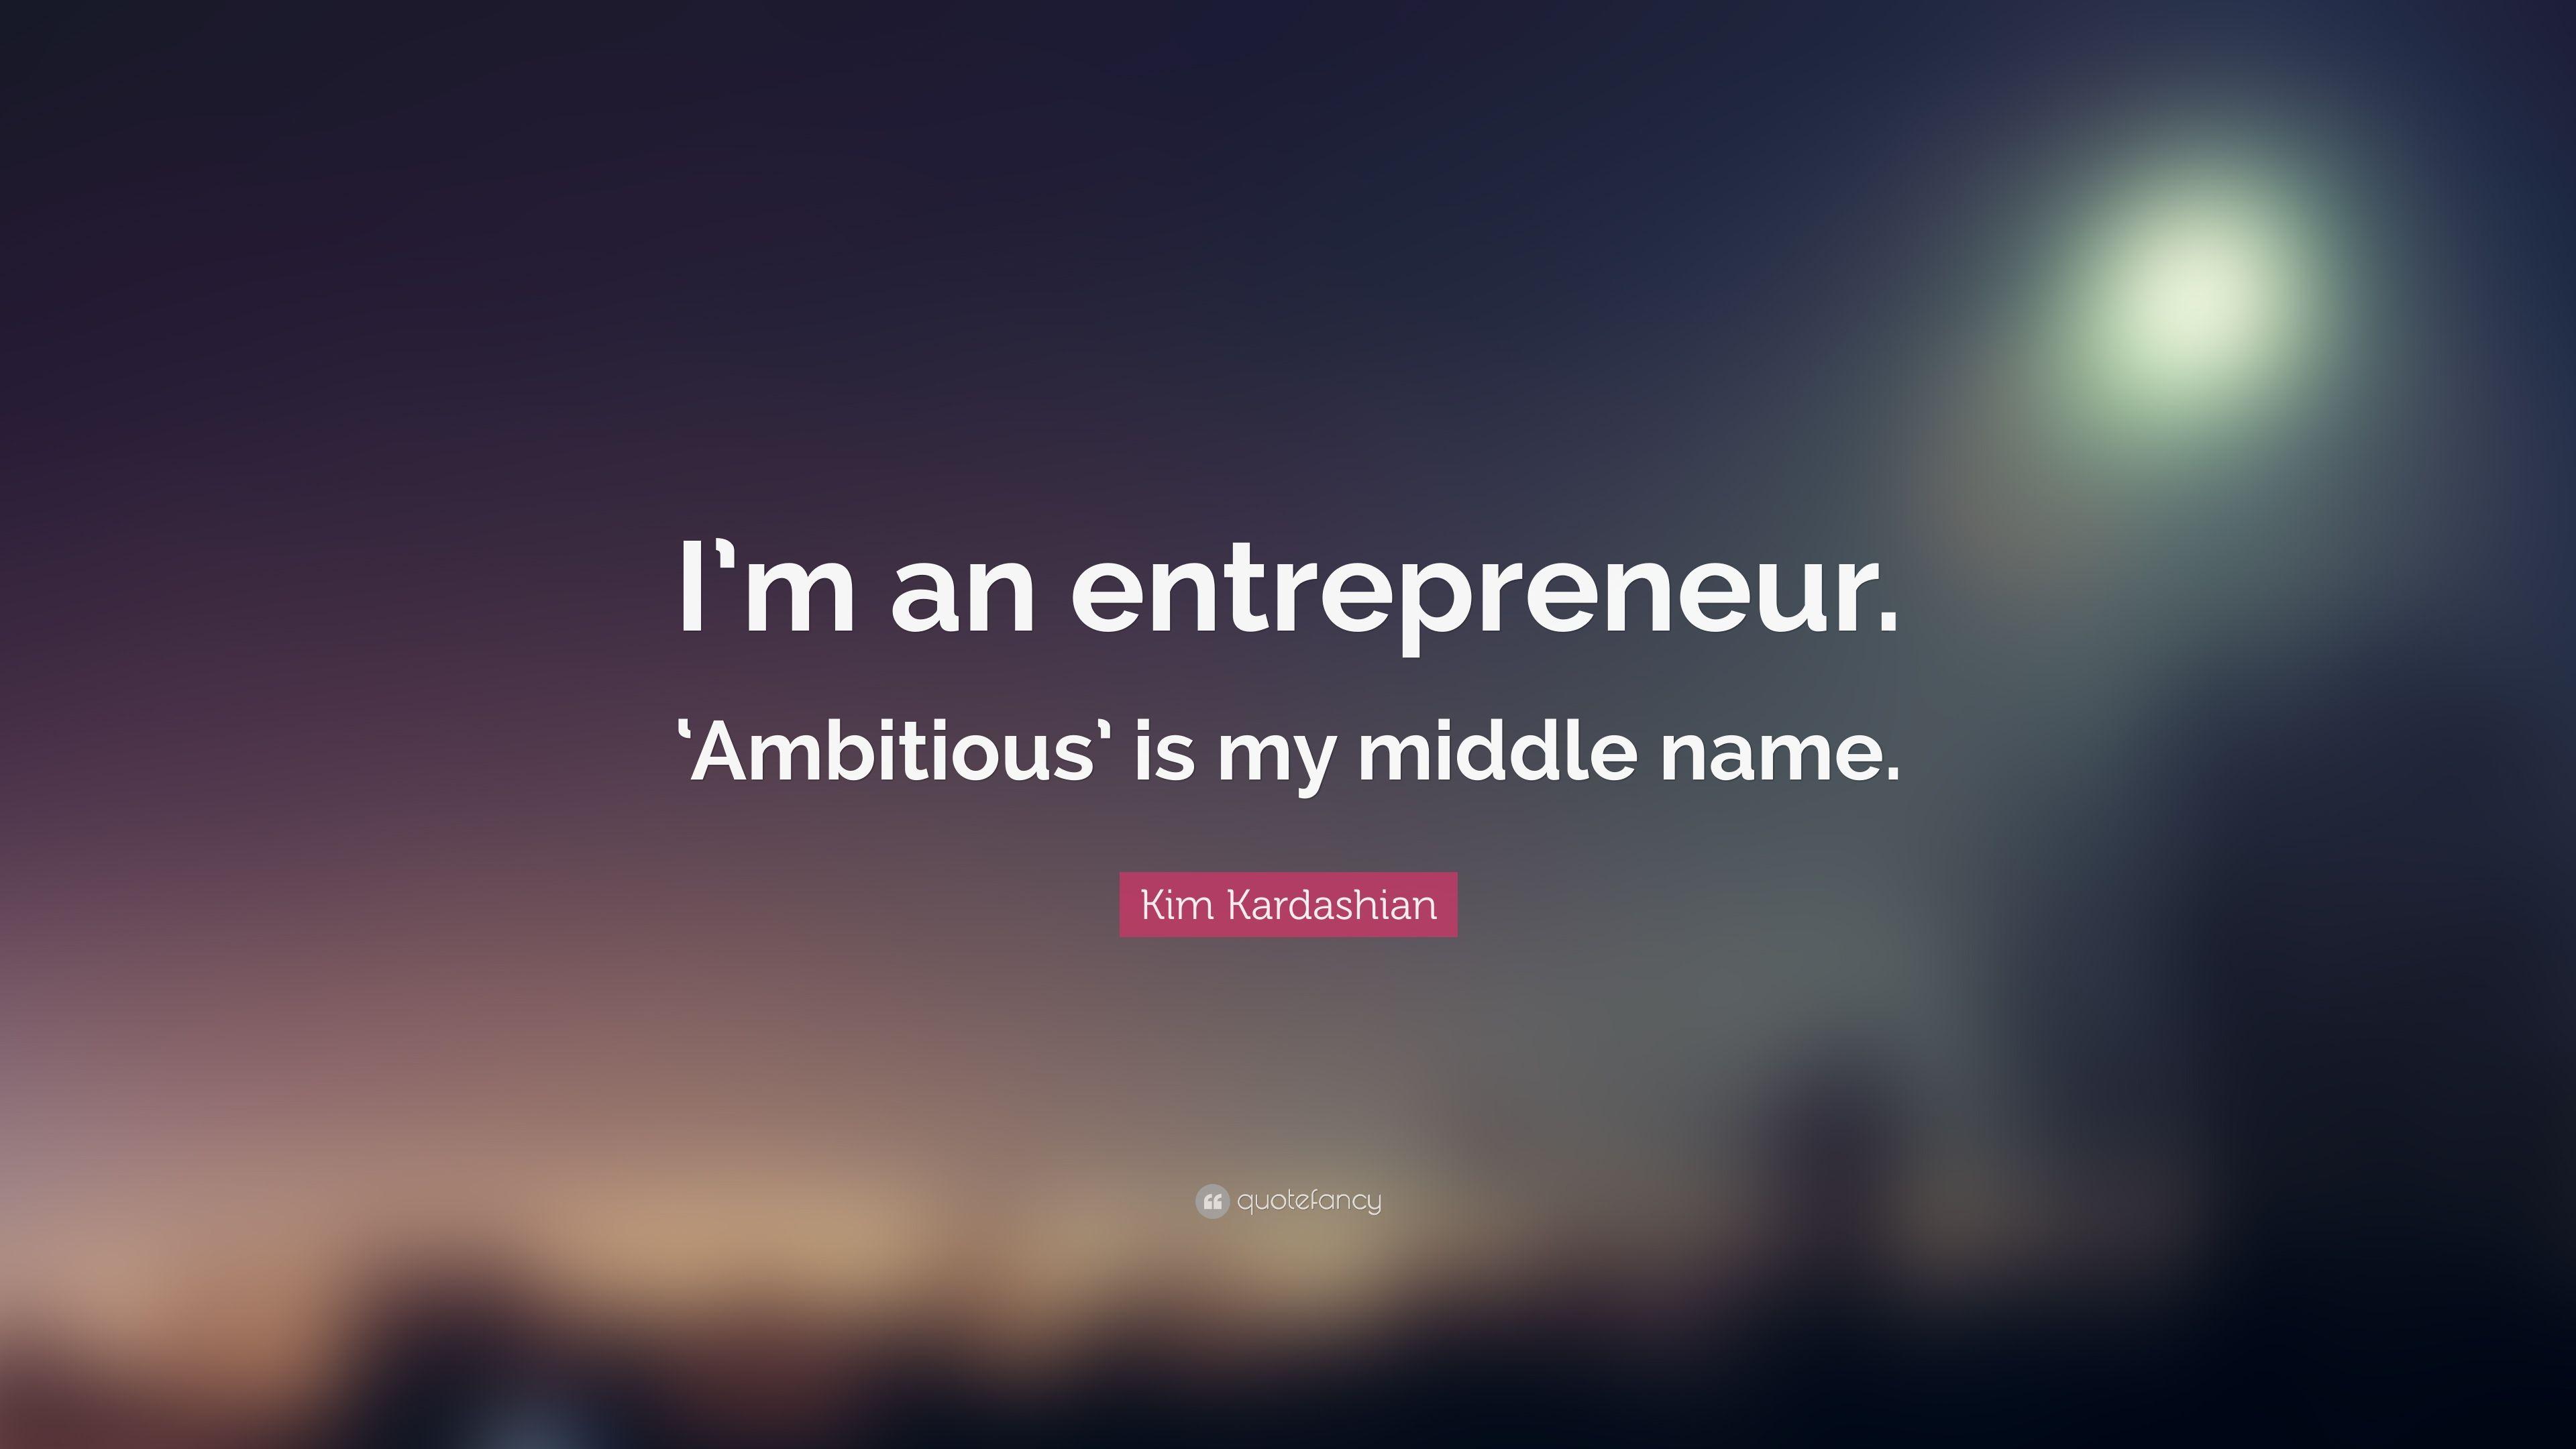 Kim Kardashian Quote: “I'm an entrepreneur. 'Ambitious' is my